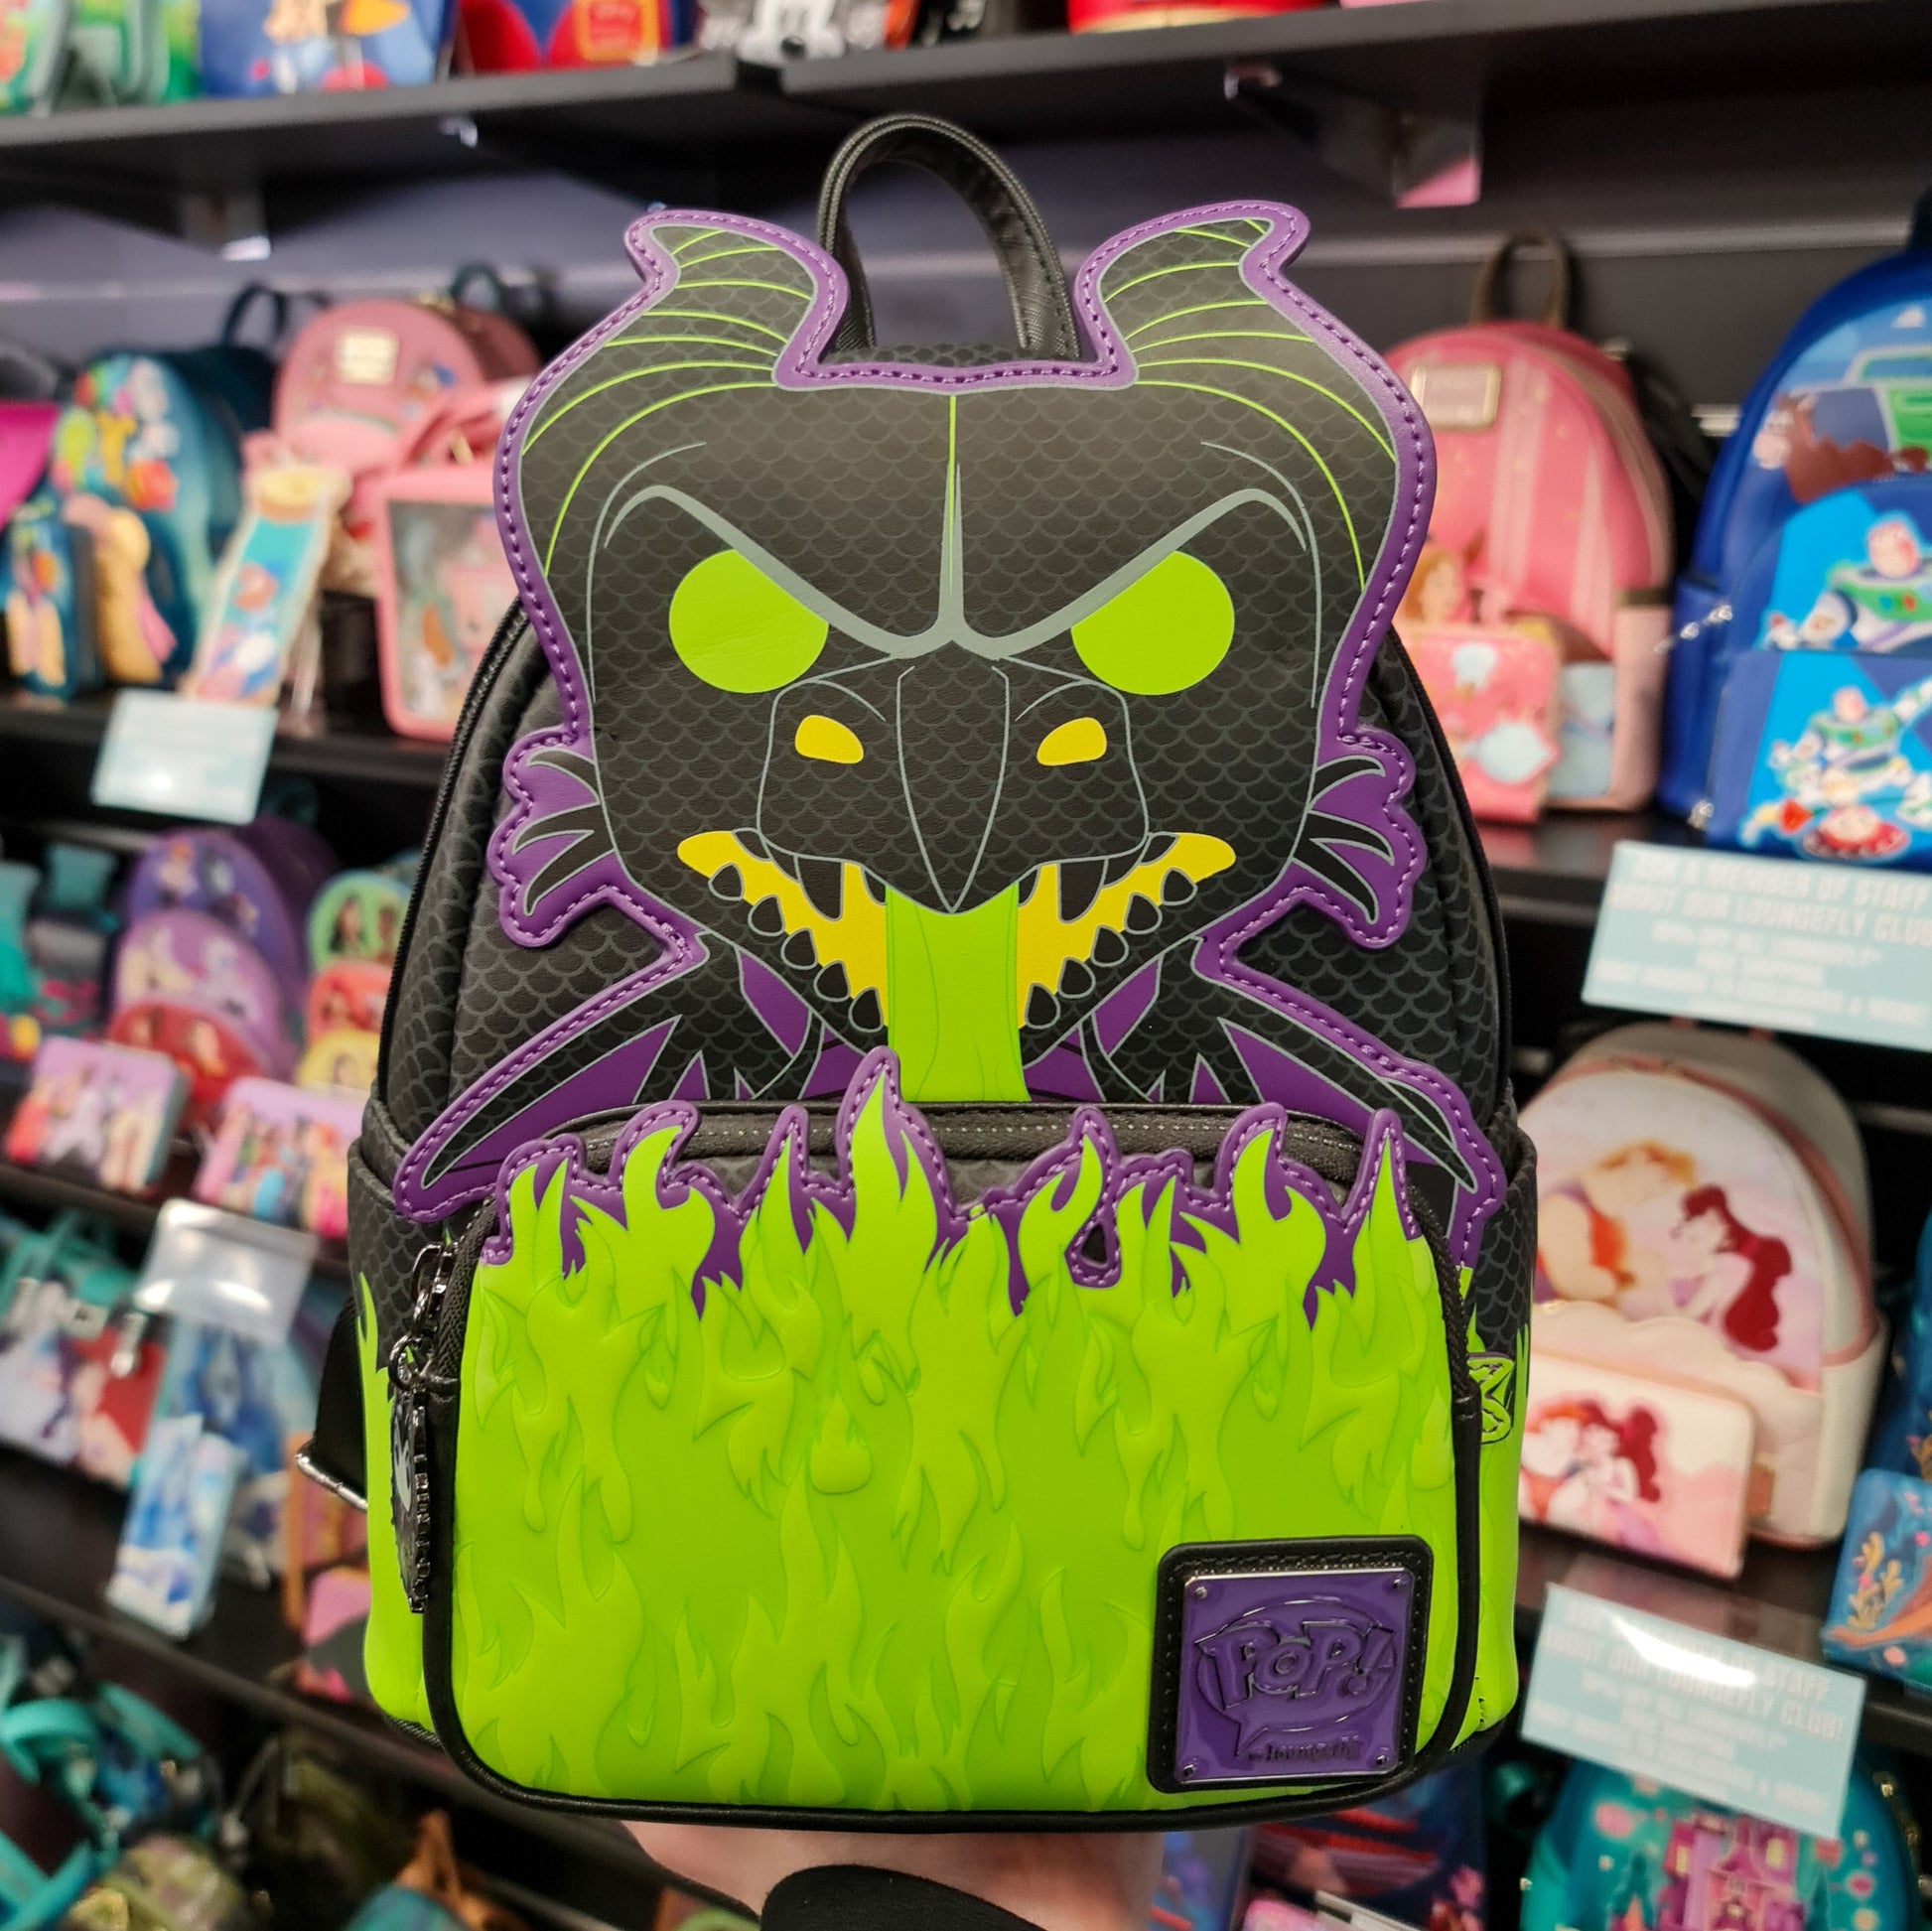 Loungefly Disney Maleficent Mini Backpack Villain Transformation Dragon Bag